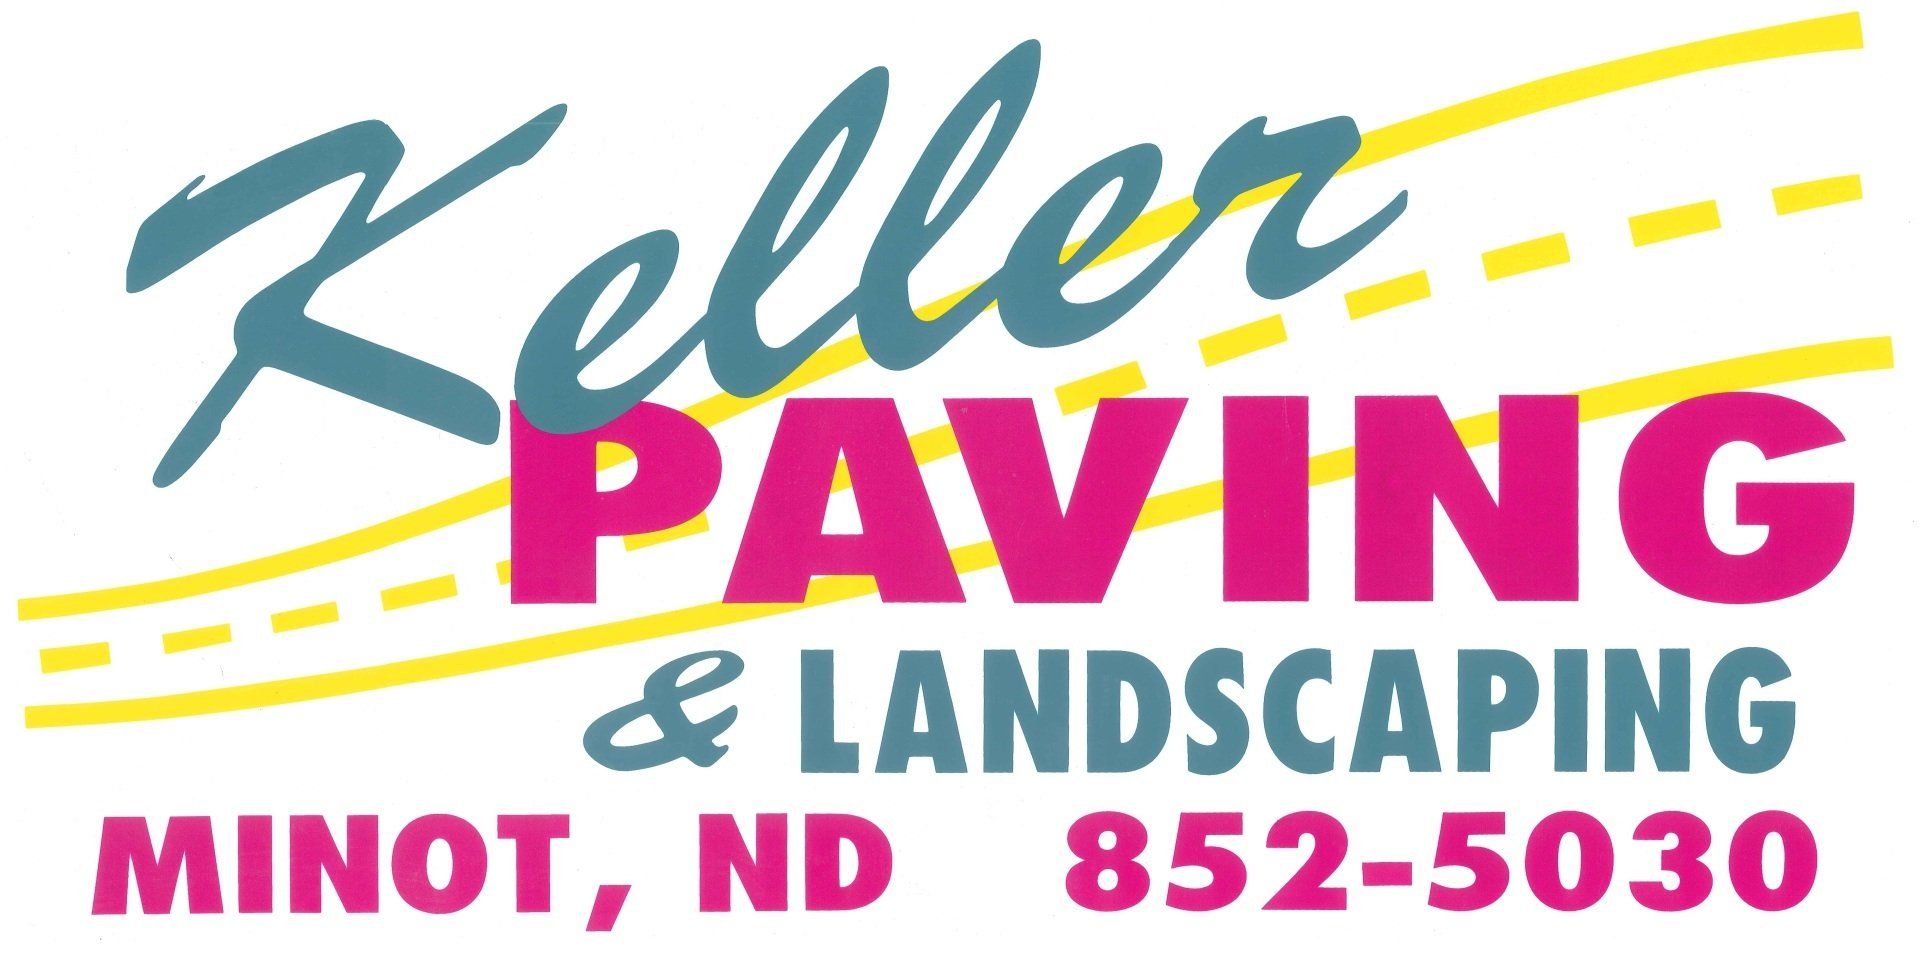 Keller Paving & Landscaping Inc logo